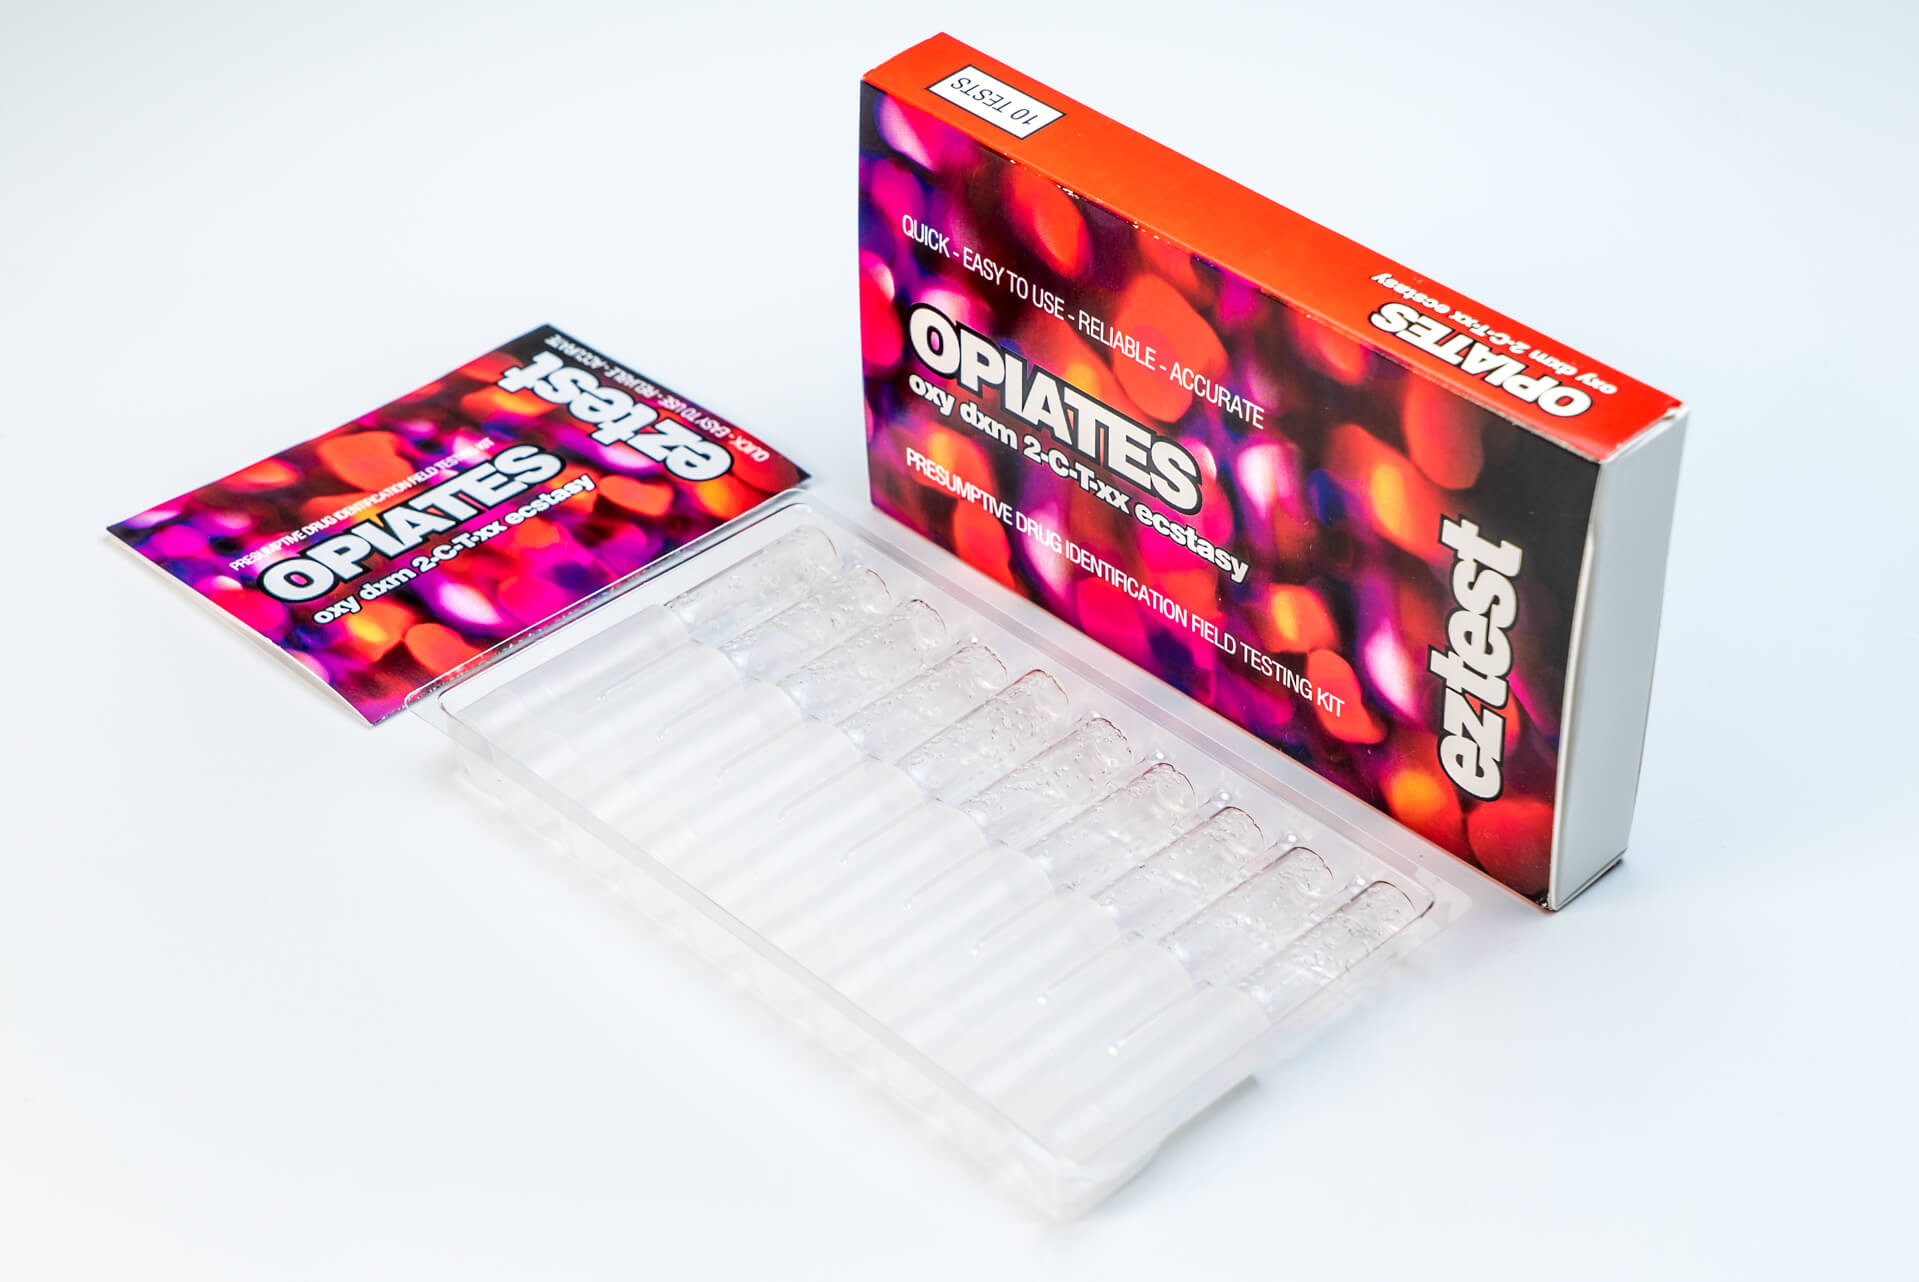 Opiates 10 Use Drug Testing Kit